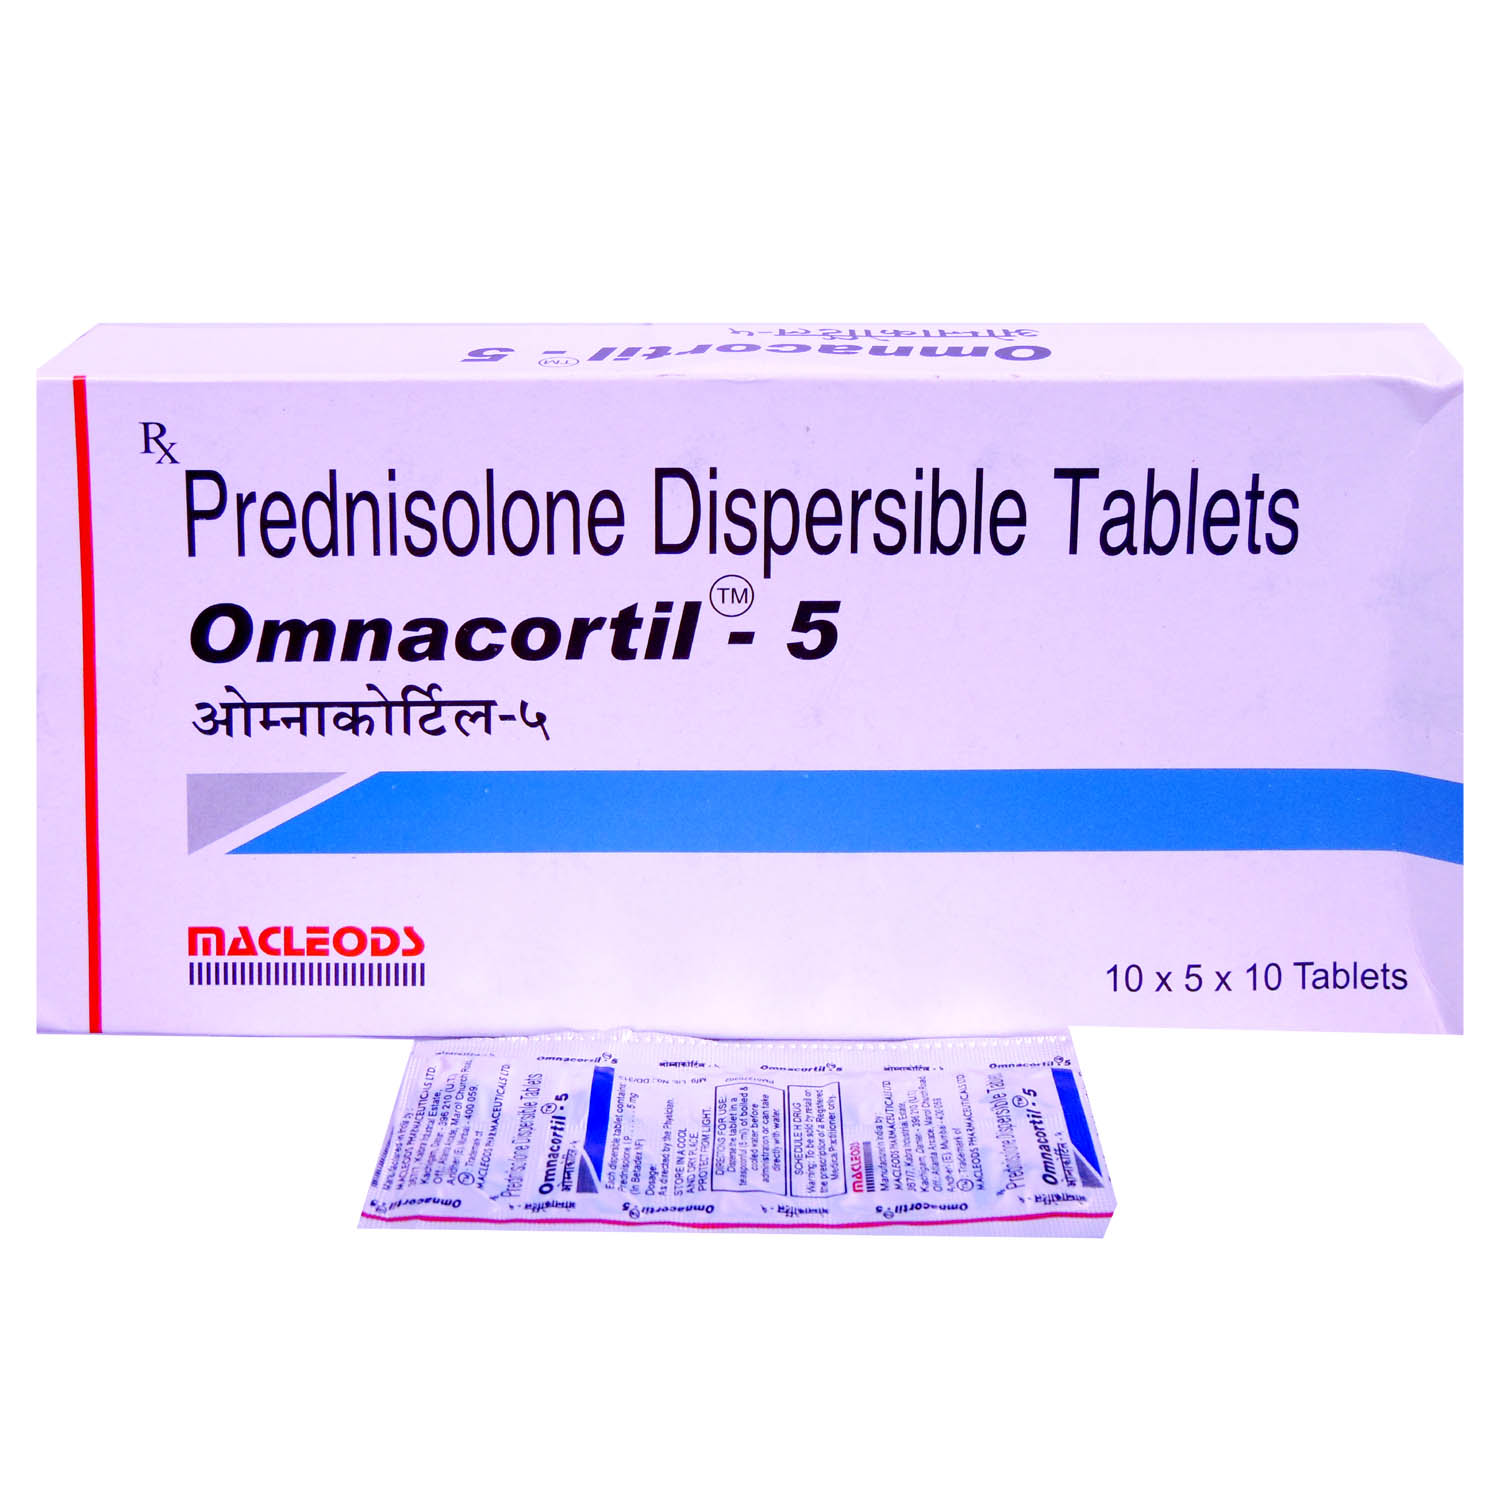 Prednisolone 5mg. Преднизолон 5 мг. Преднизолон таблетки 5 мг. Преднизолон 10 мг. Преднизолон 5 мг купить